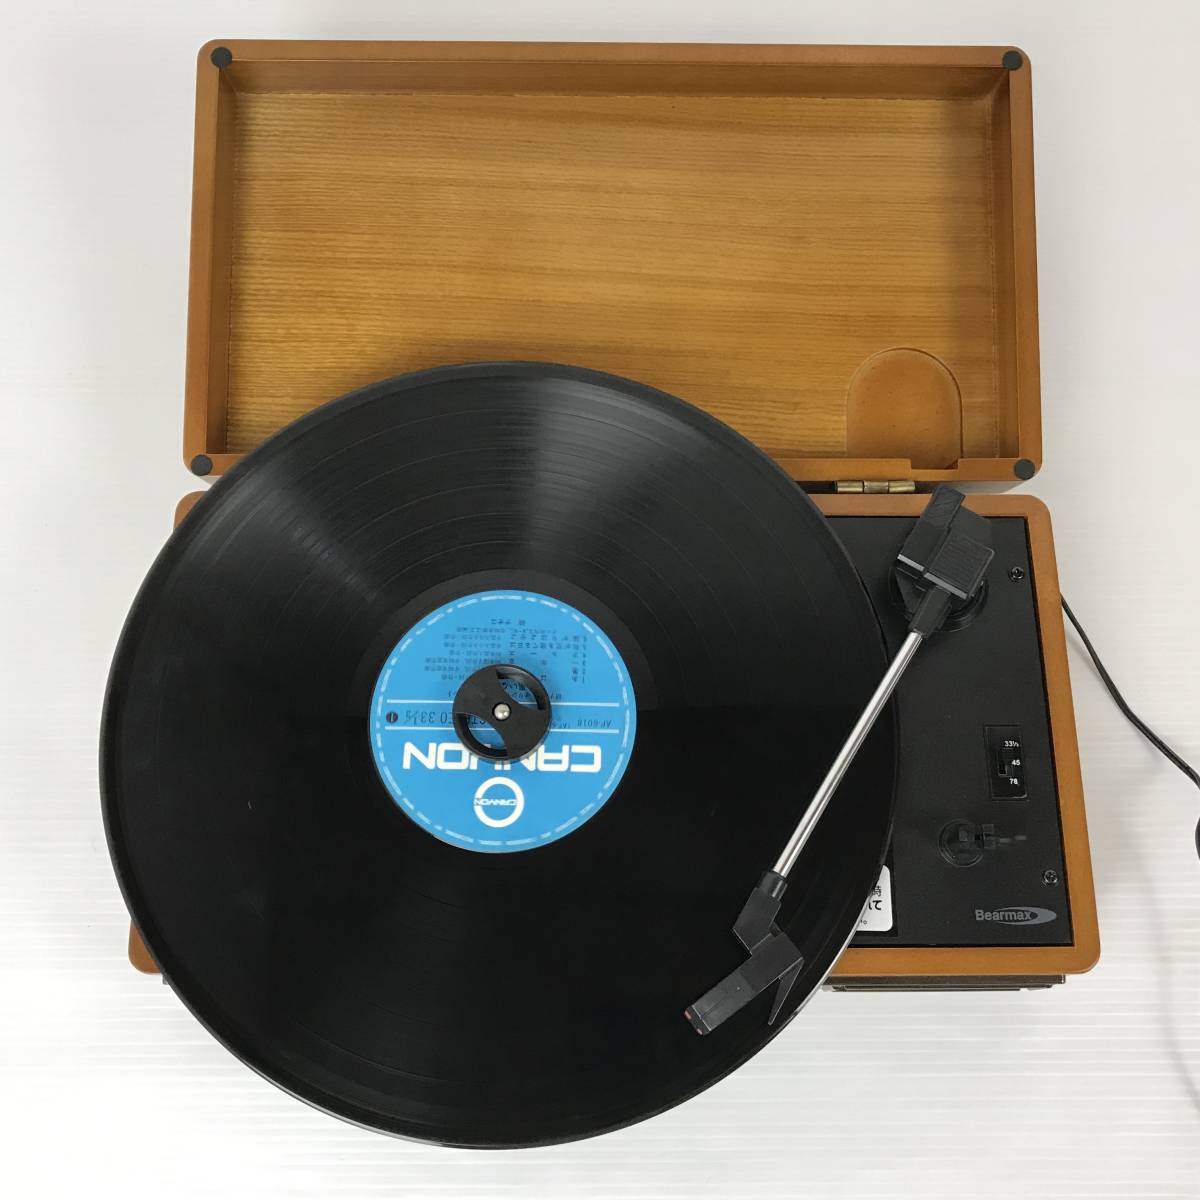 Bearmax アンティーク調 ラジオ レコードプレーヤー AT-2519 EP LP SP 